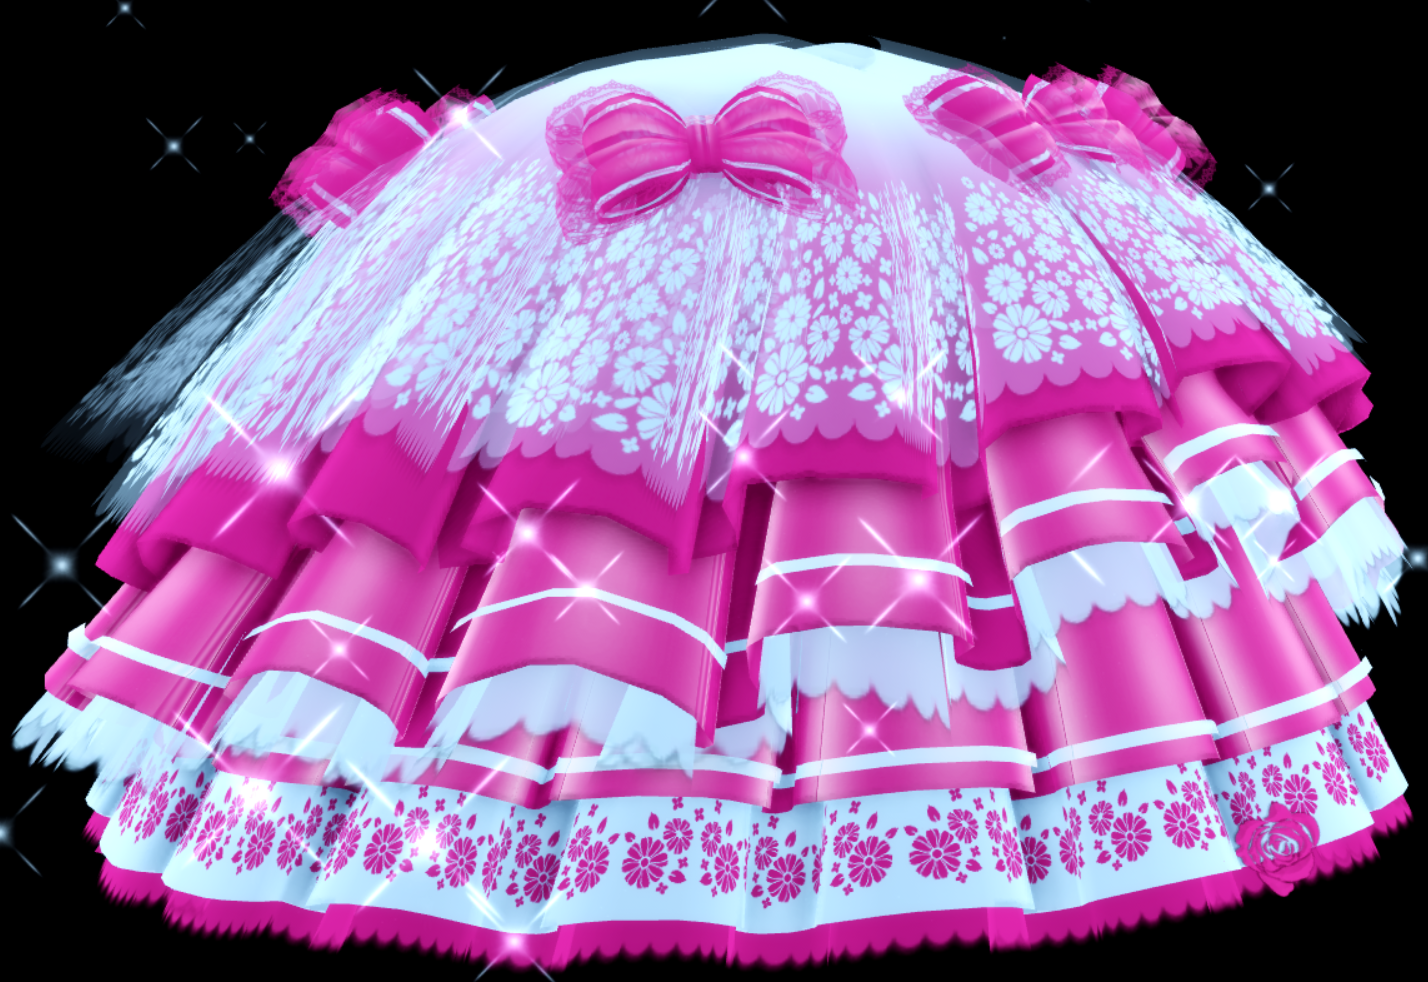 Miss Lady Rose Skirt Royale High Wiki Fandom - roblox pink skirt